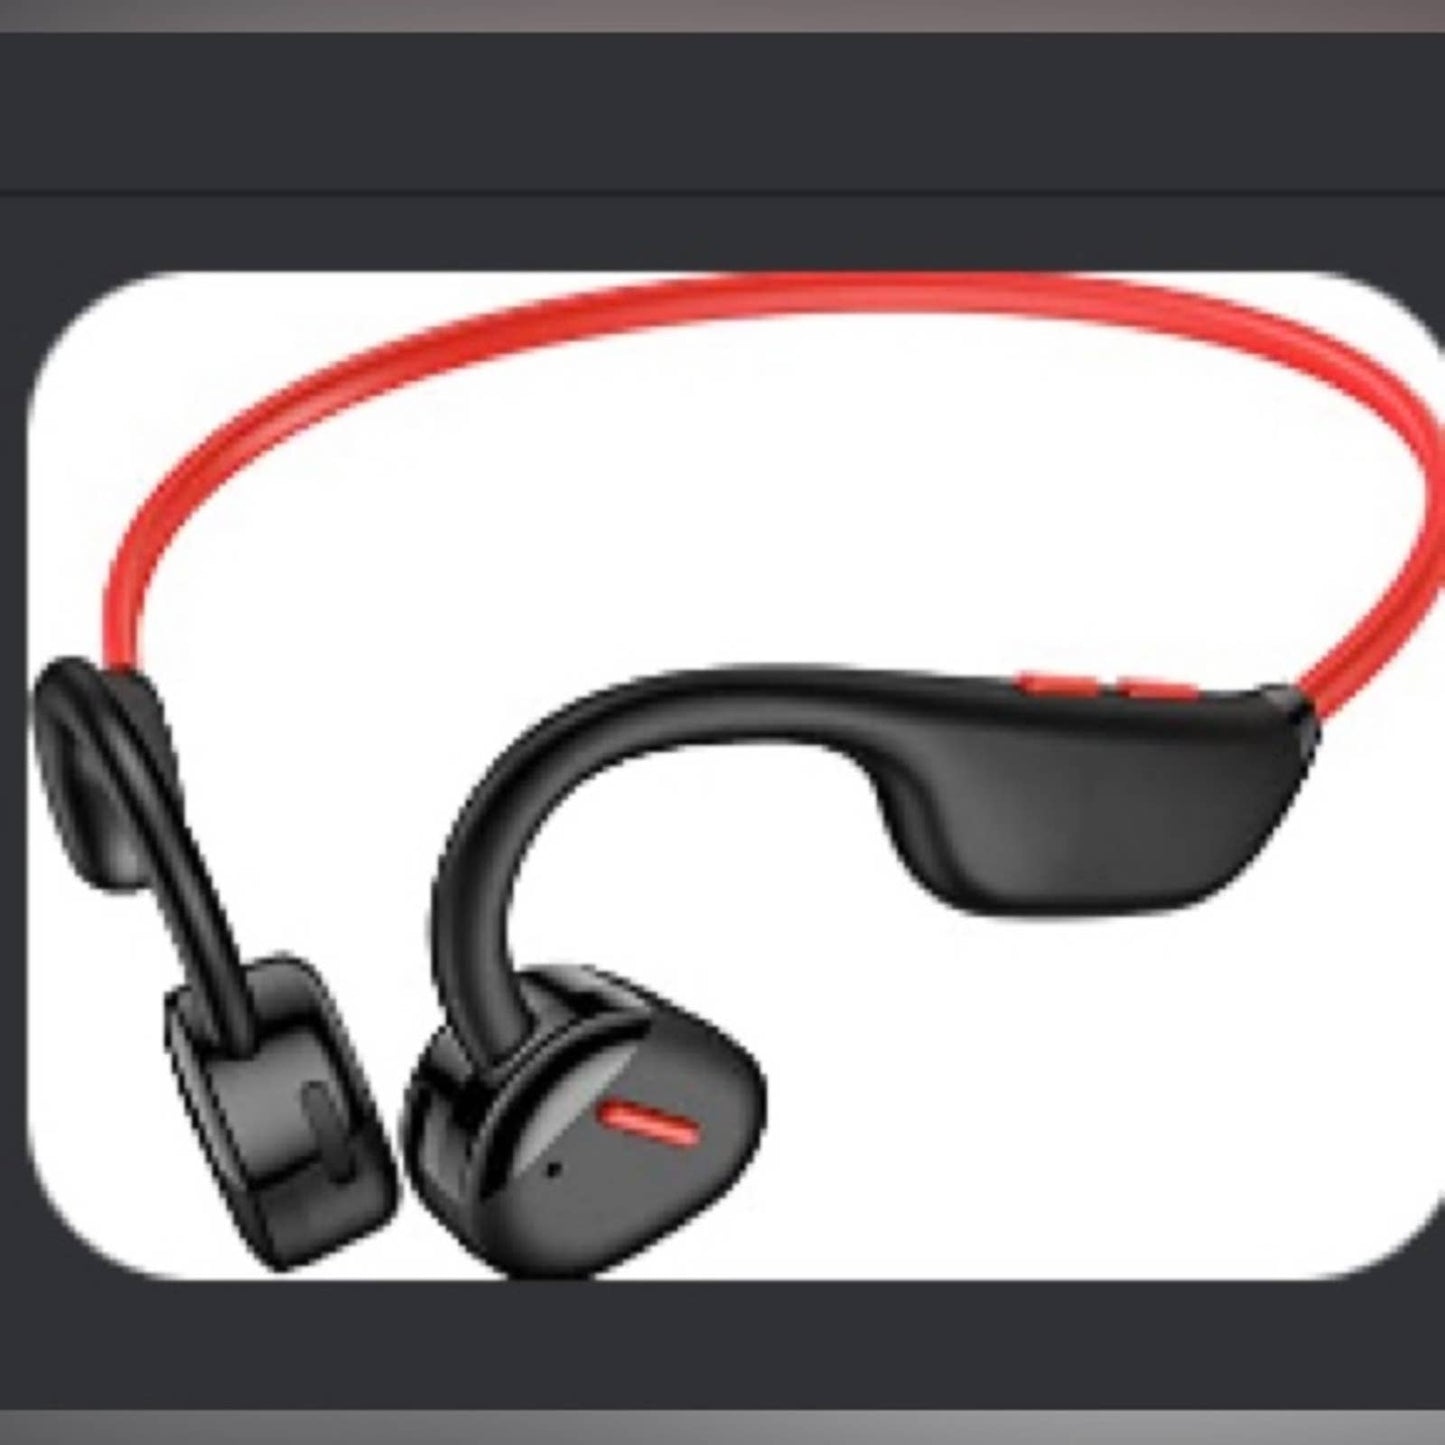 VRIFOZ Wireless Headphones Open Ear Headphones, Air Conduction Bluetooth